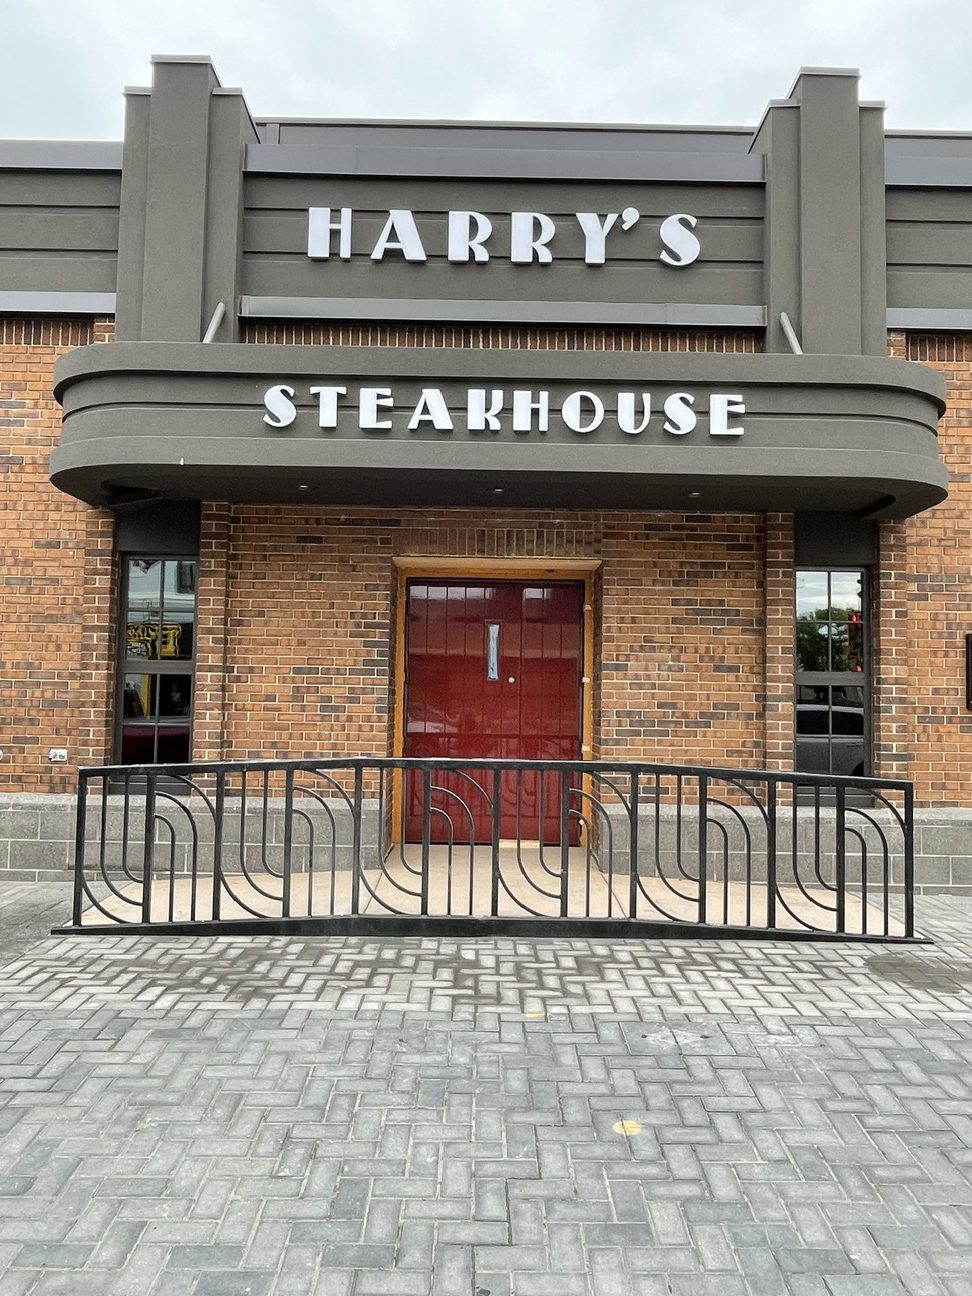 HARRY'S STEAKHOUSE